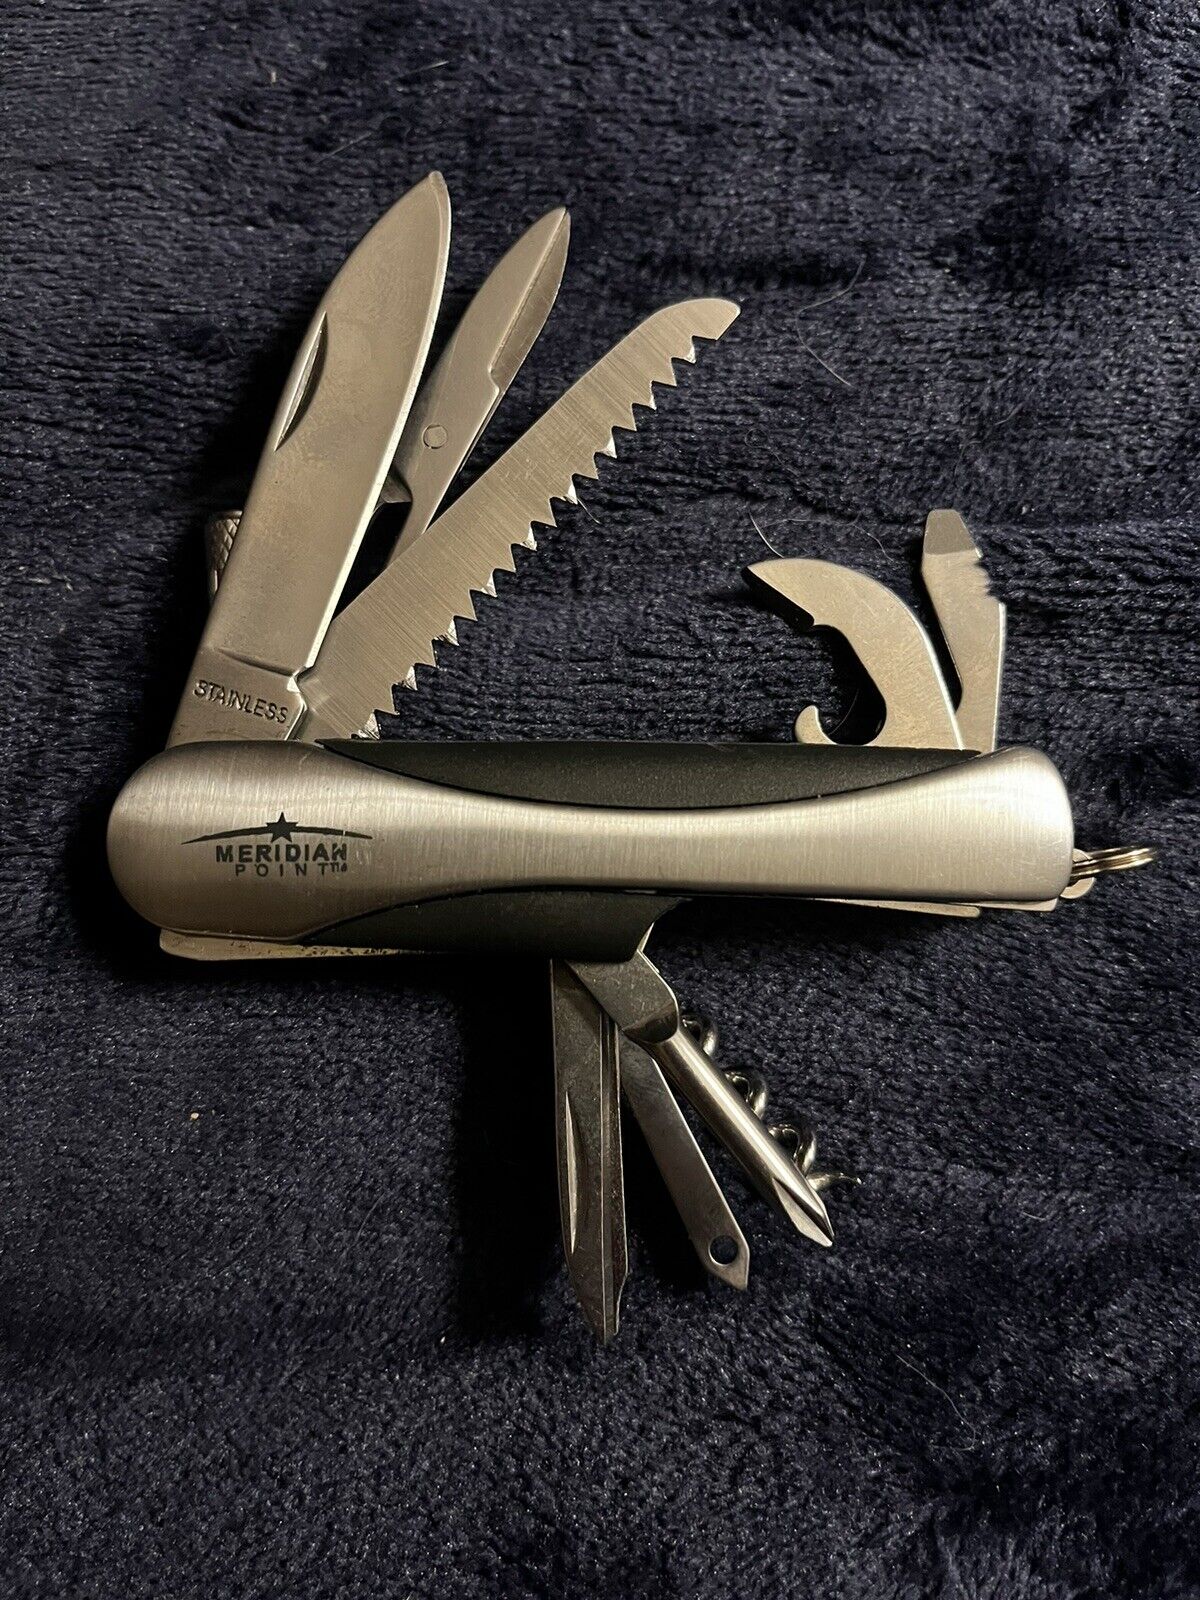 Pocket Knife-Meridian Point 11 In 1 Multi Function Tool